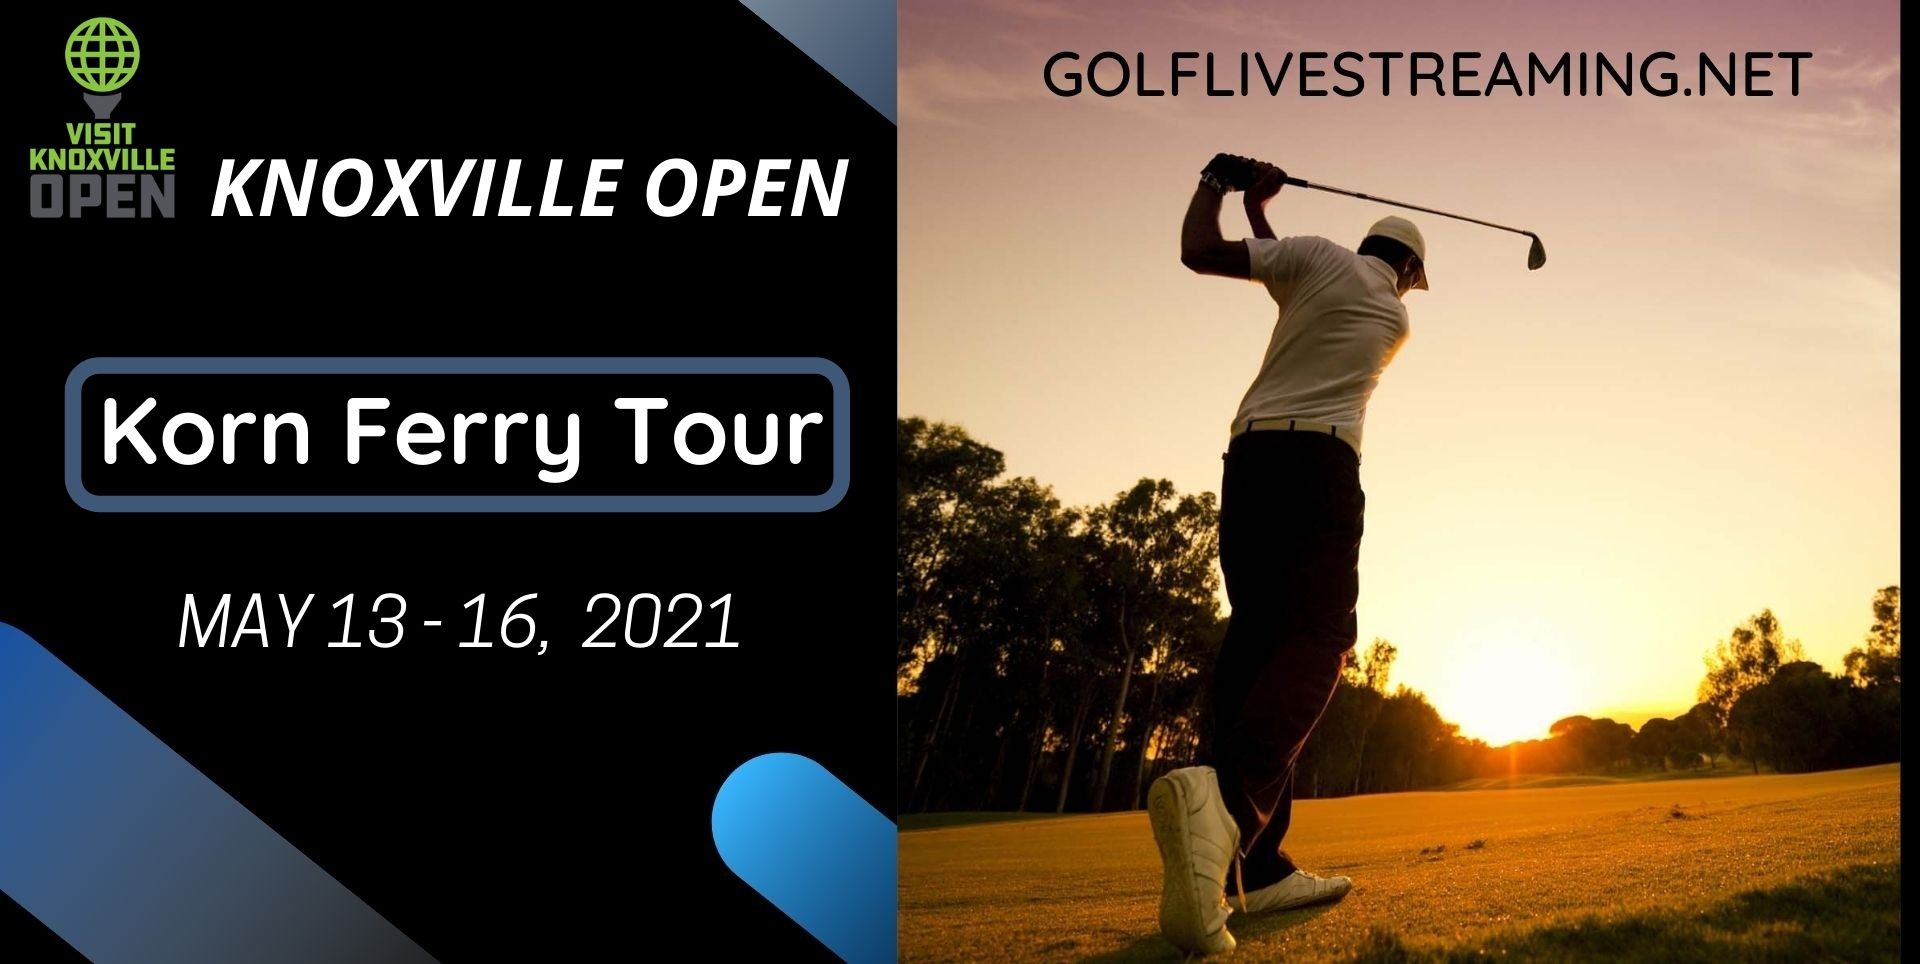 Visit Knoxville Open Korn Ferry Golf Live Stream 2021